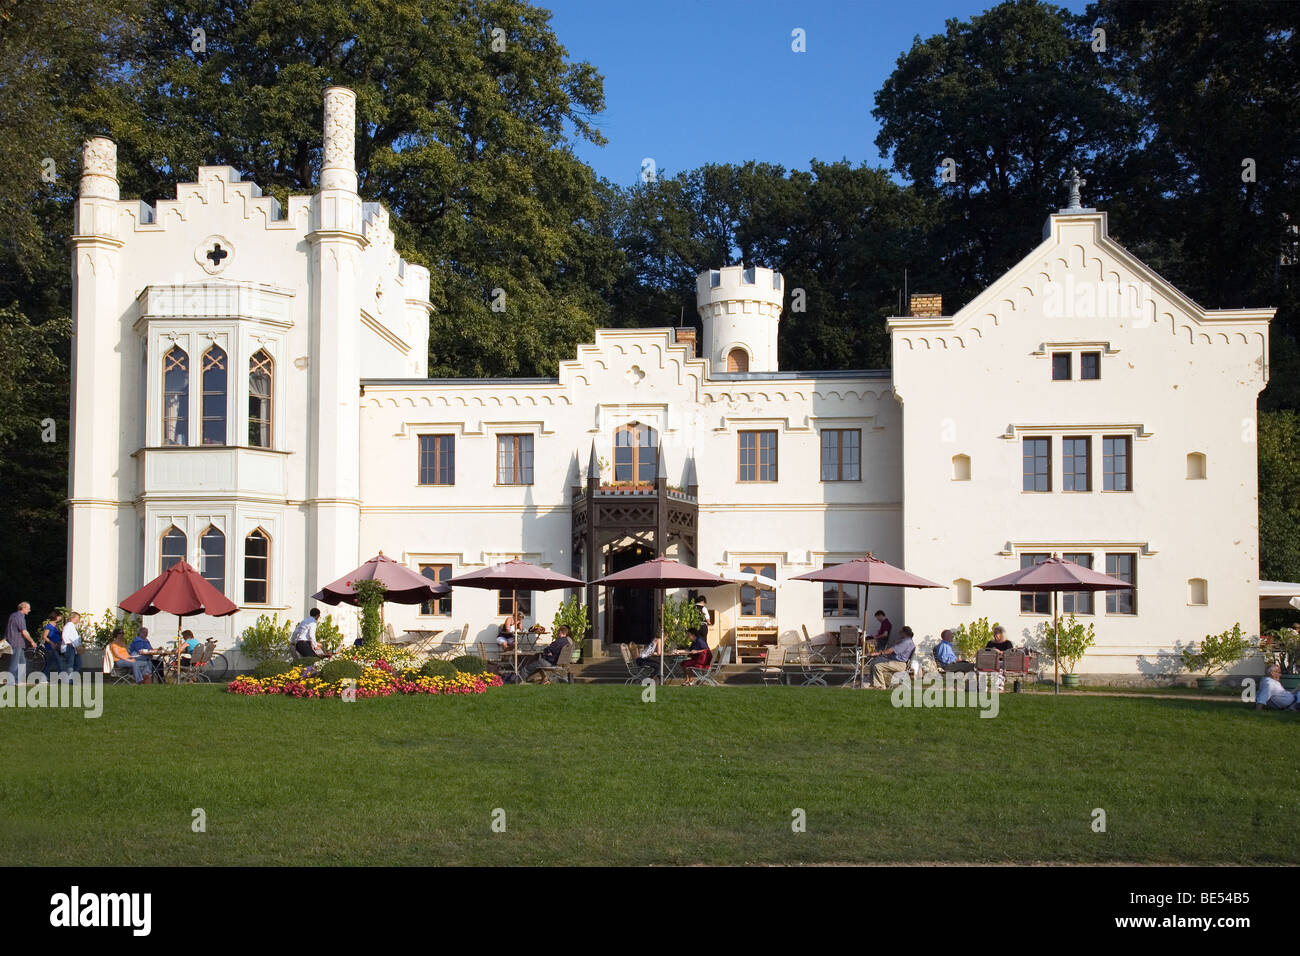 Kleines Schloss, Park Babelsberg, Potsdam, Brandenburg, Germany Stock Photo